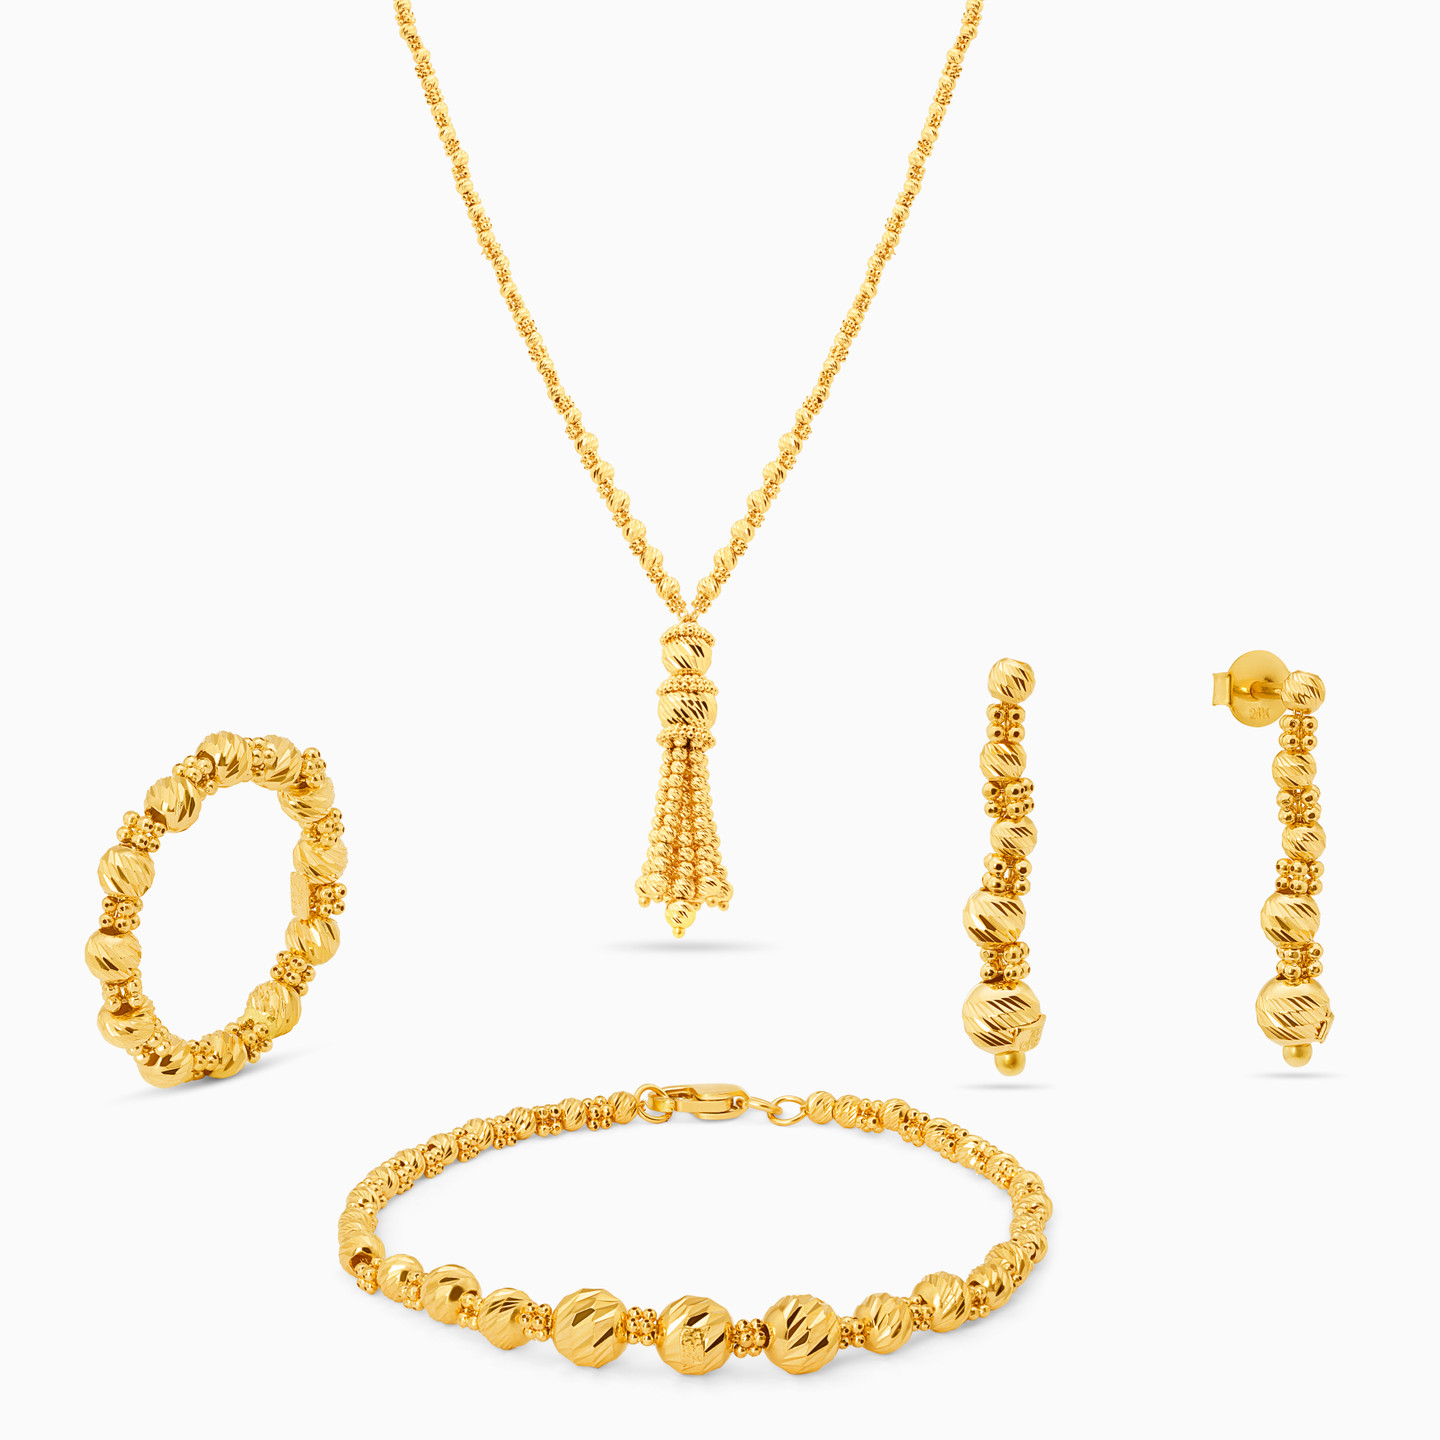 21K Gold Jewelry Set - 4 Pieces